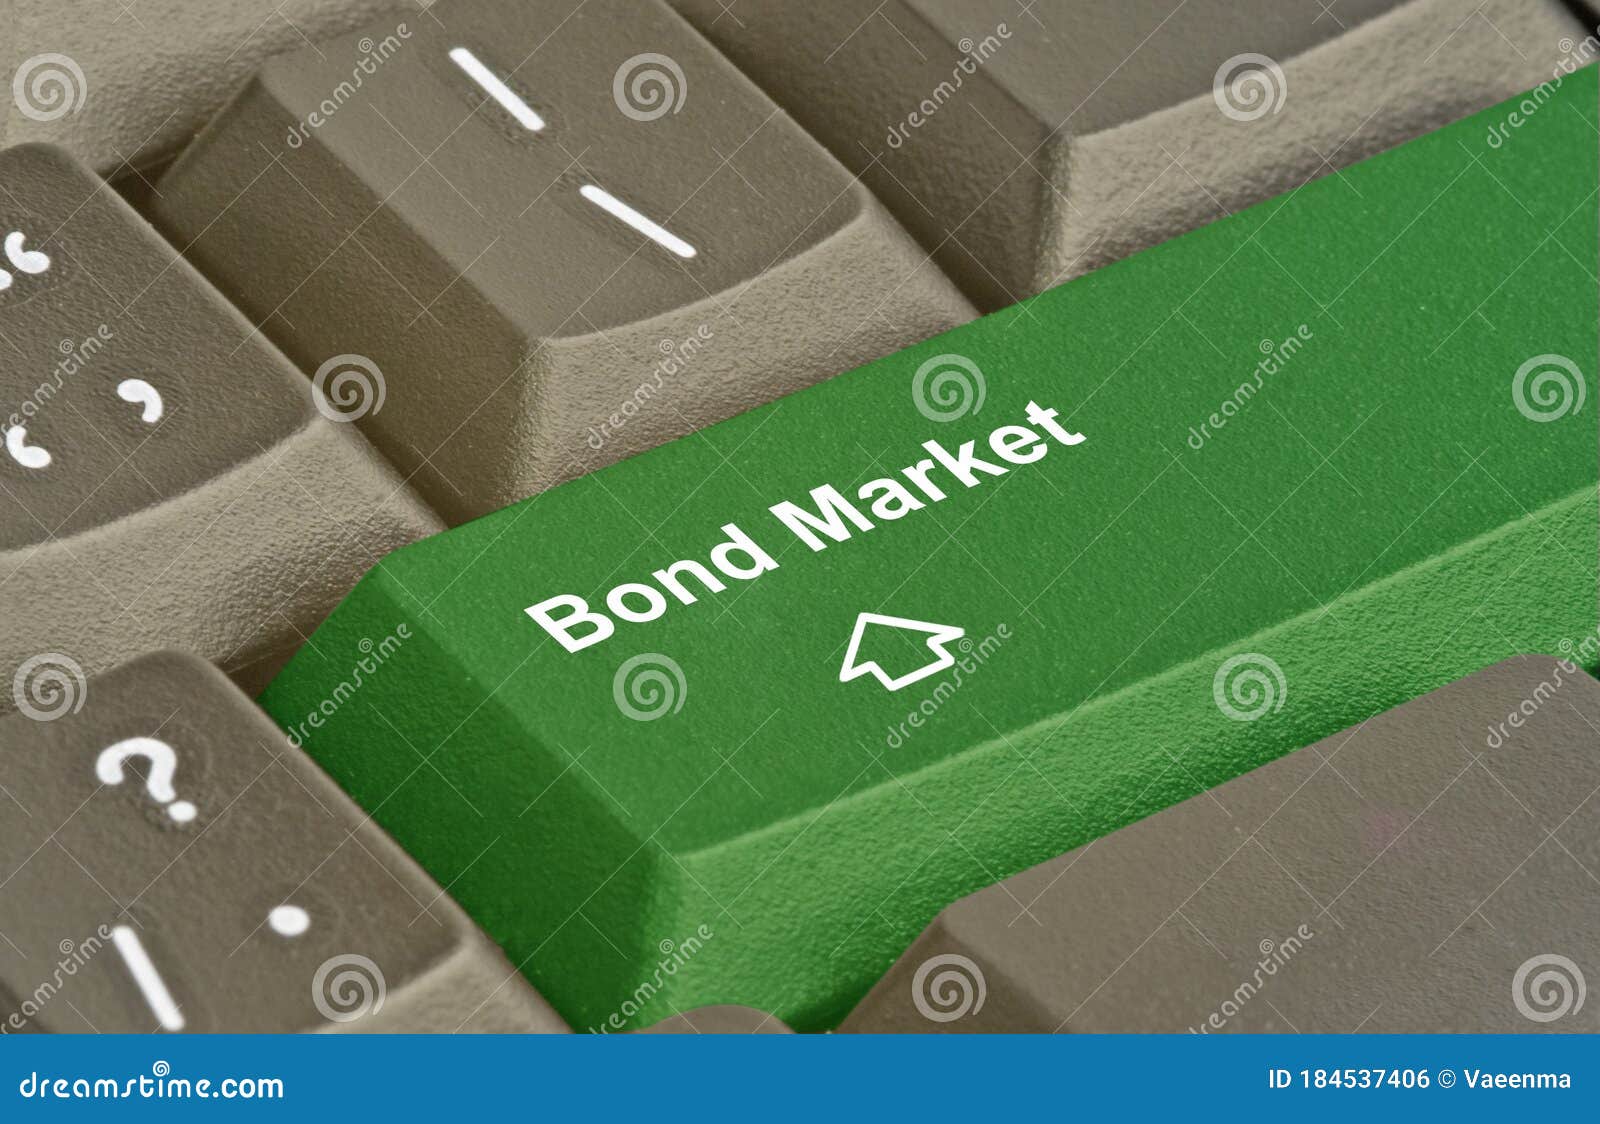 key for bond market